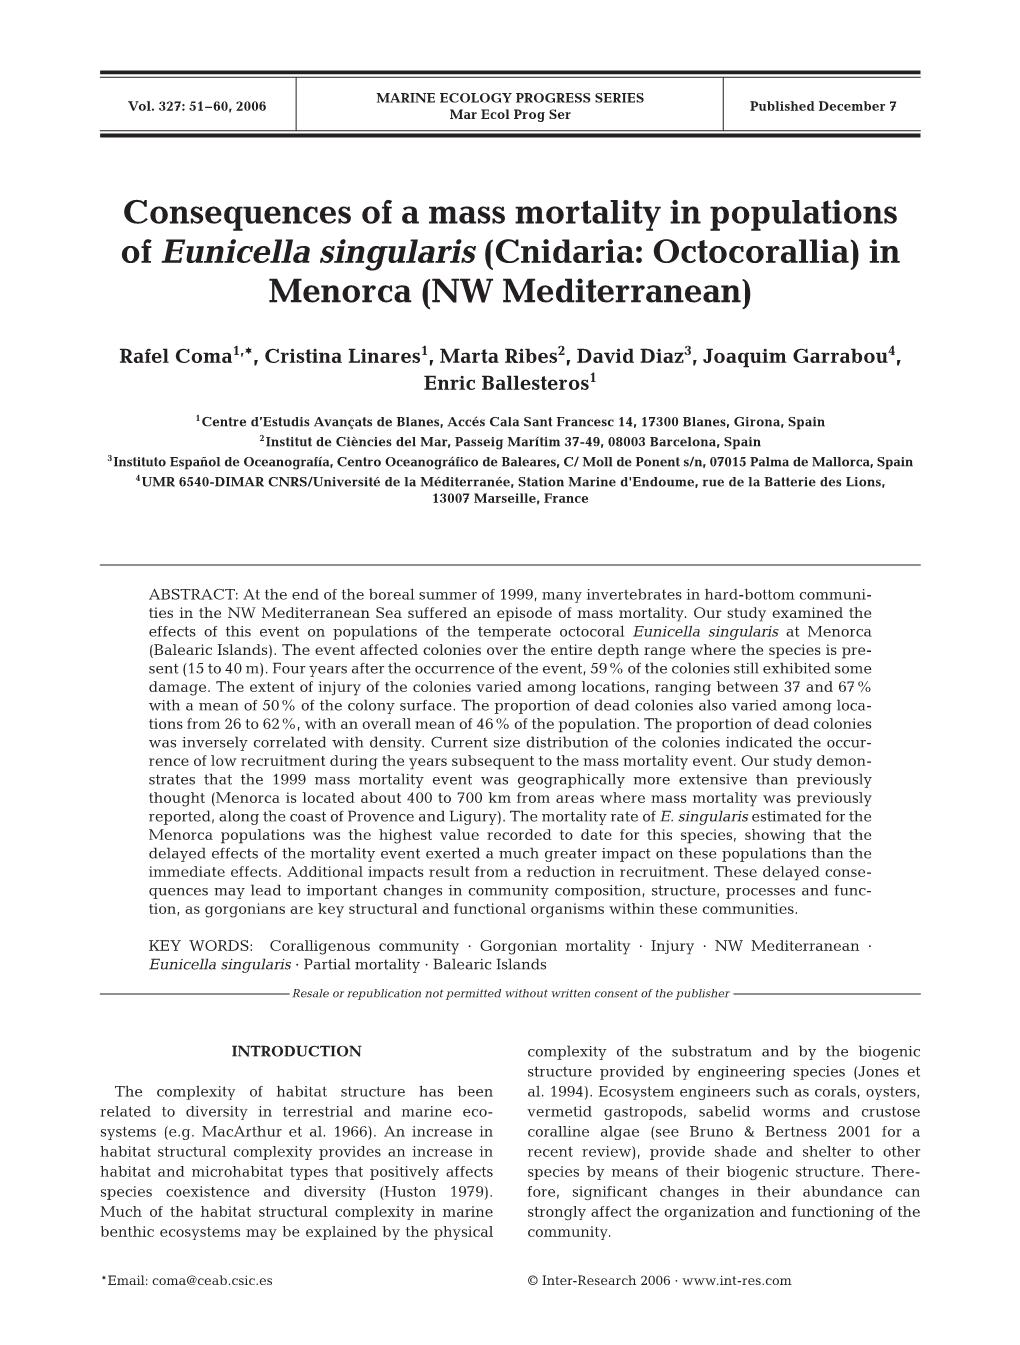 Consequences of a Mass Mortality in Populations of Eunicella Singularis (Cnidaria: Octocorallia) in Menorca (NW Mediterranean)